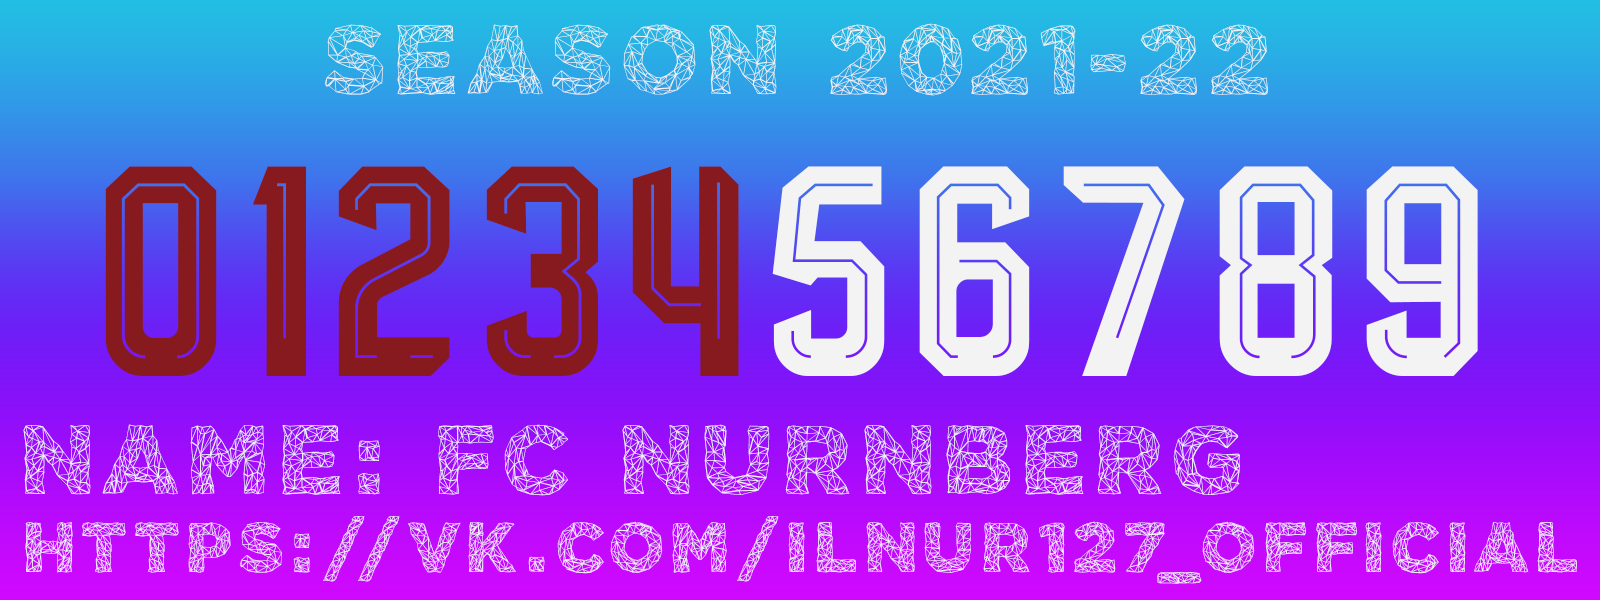 FC Nürnberg 2021-22 (kitnumbers).png